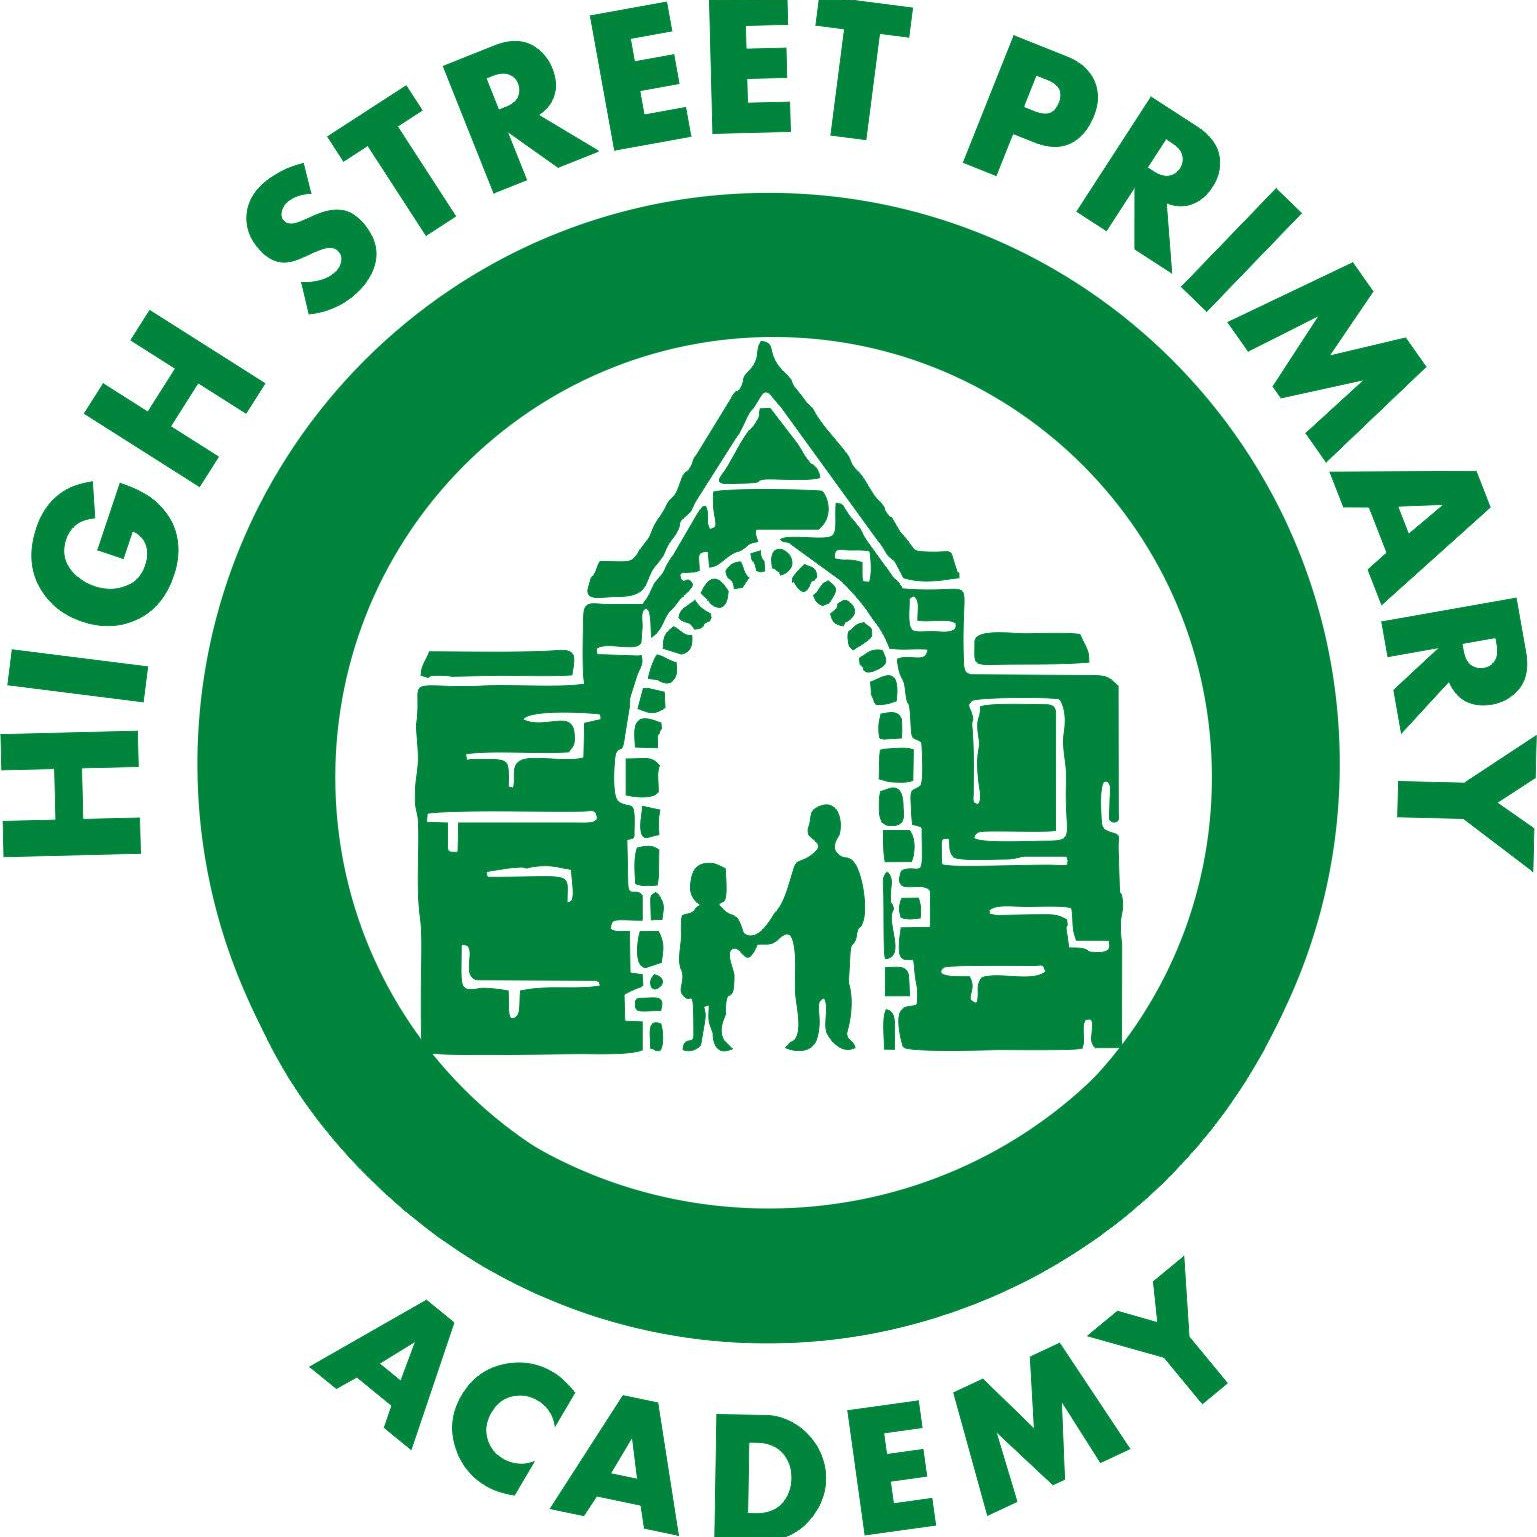 High Street Primary Academy